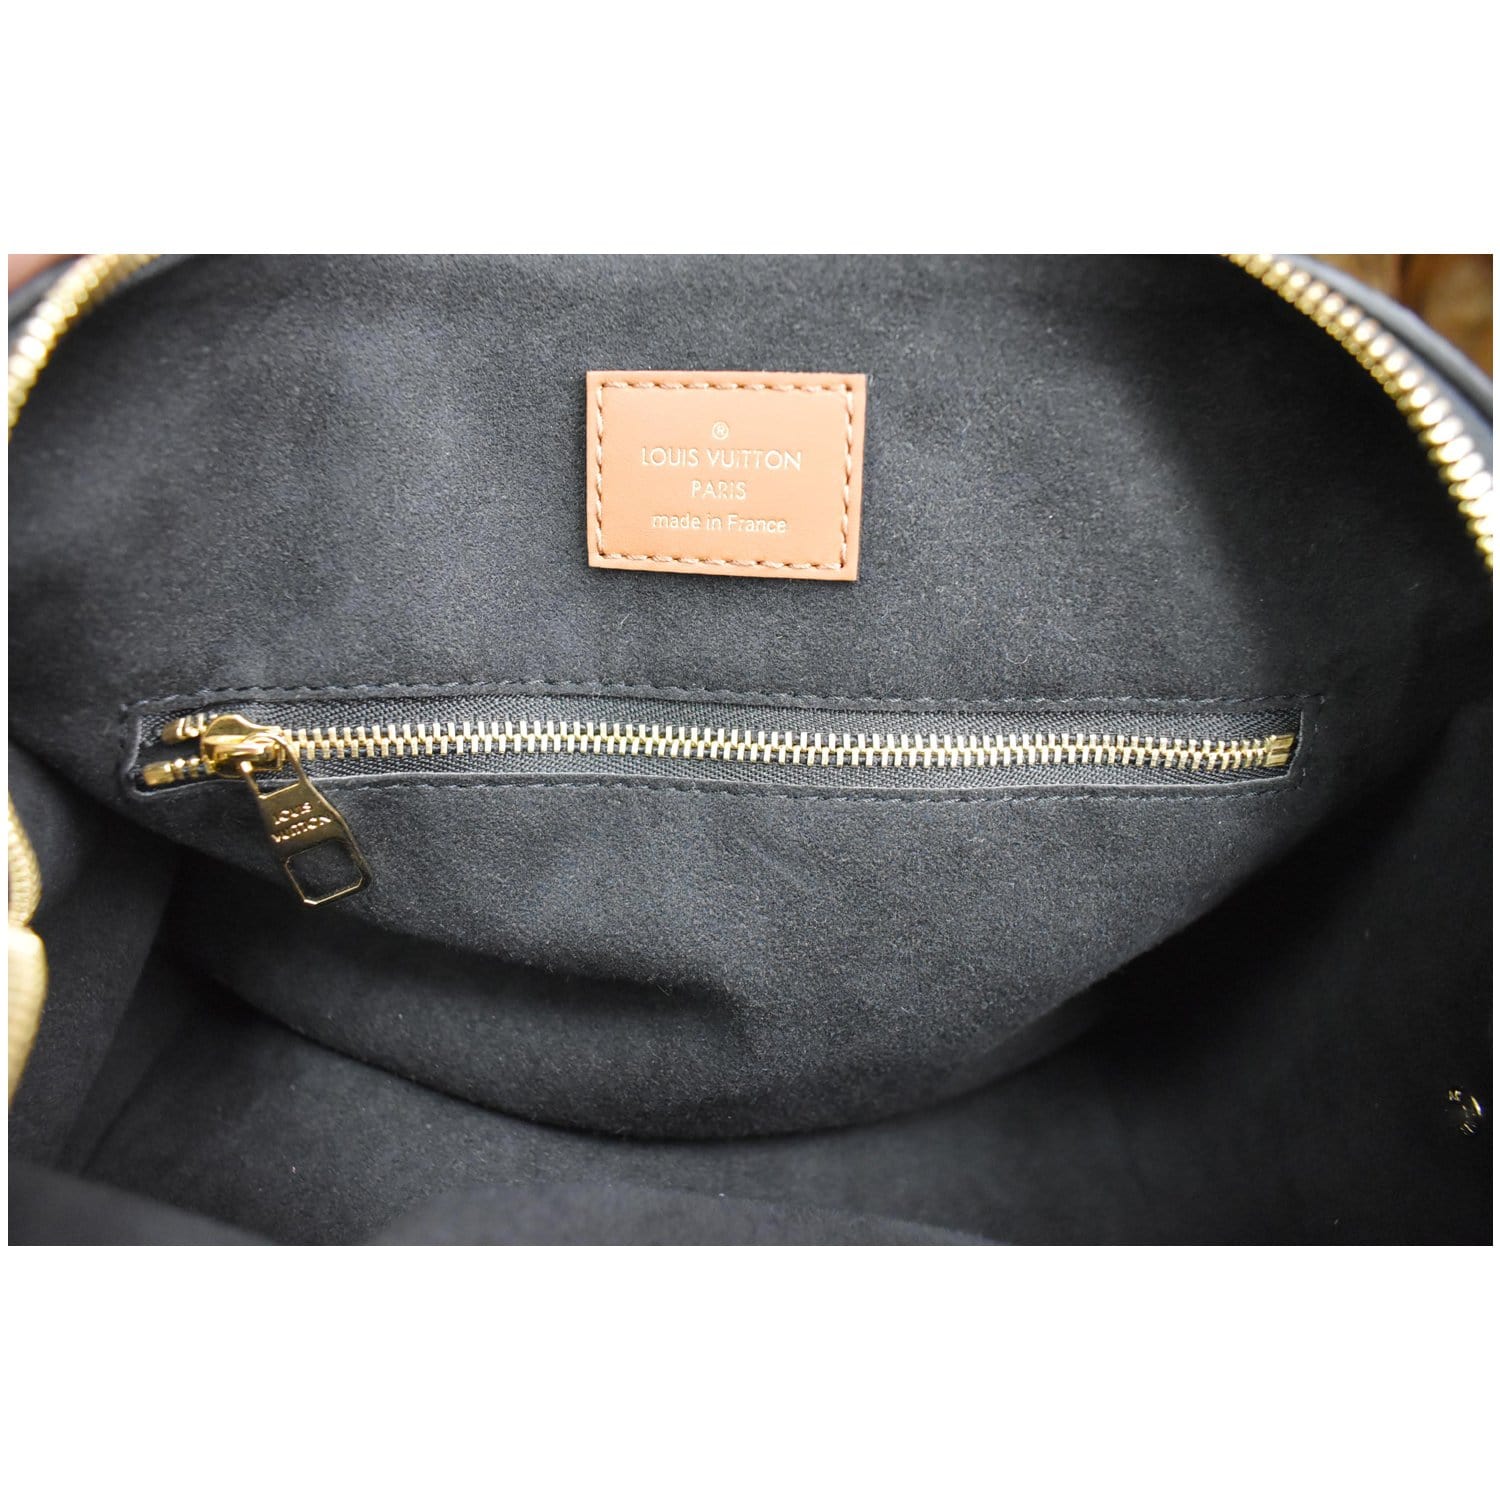 New Louis Vuitton Wild At Heart Speedy Bag 25